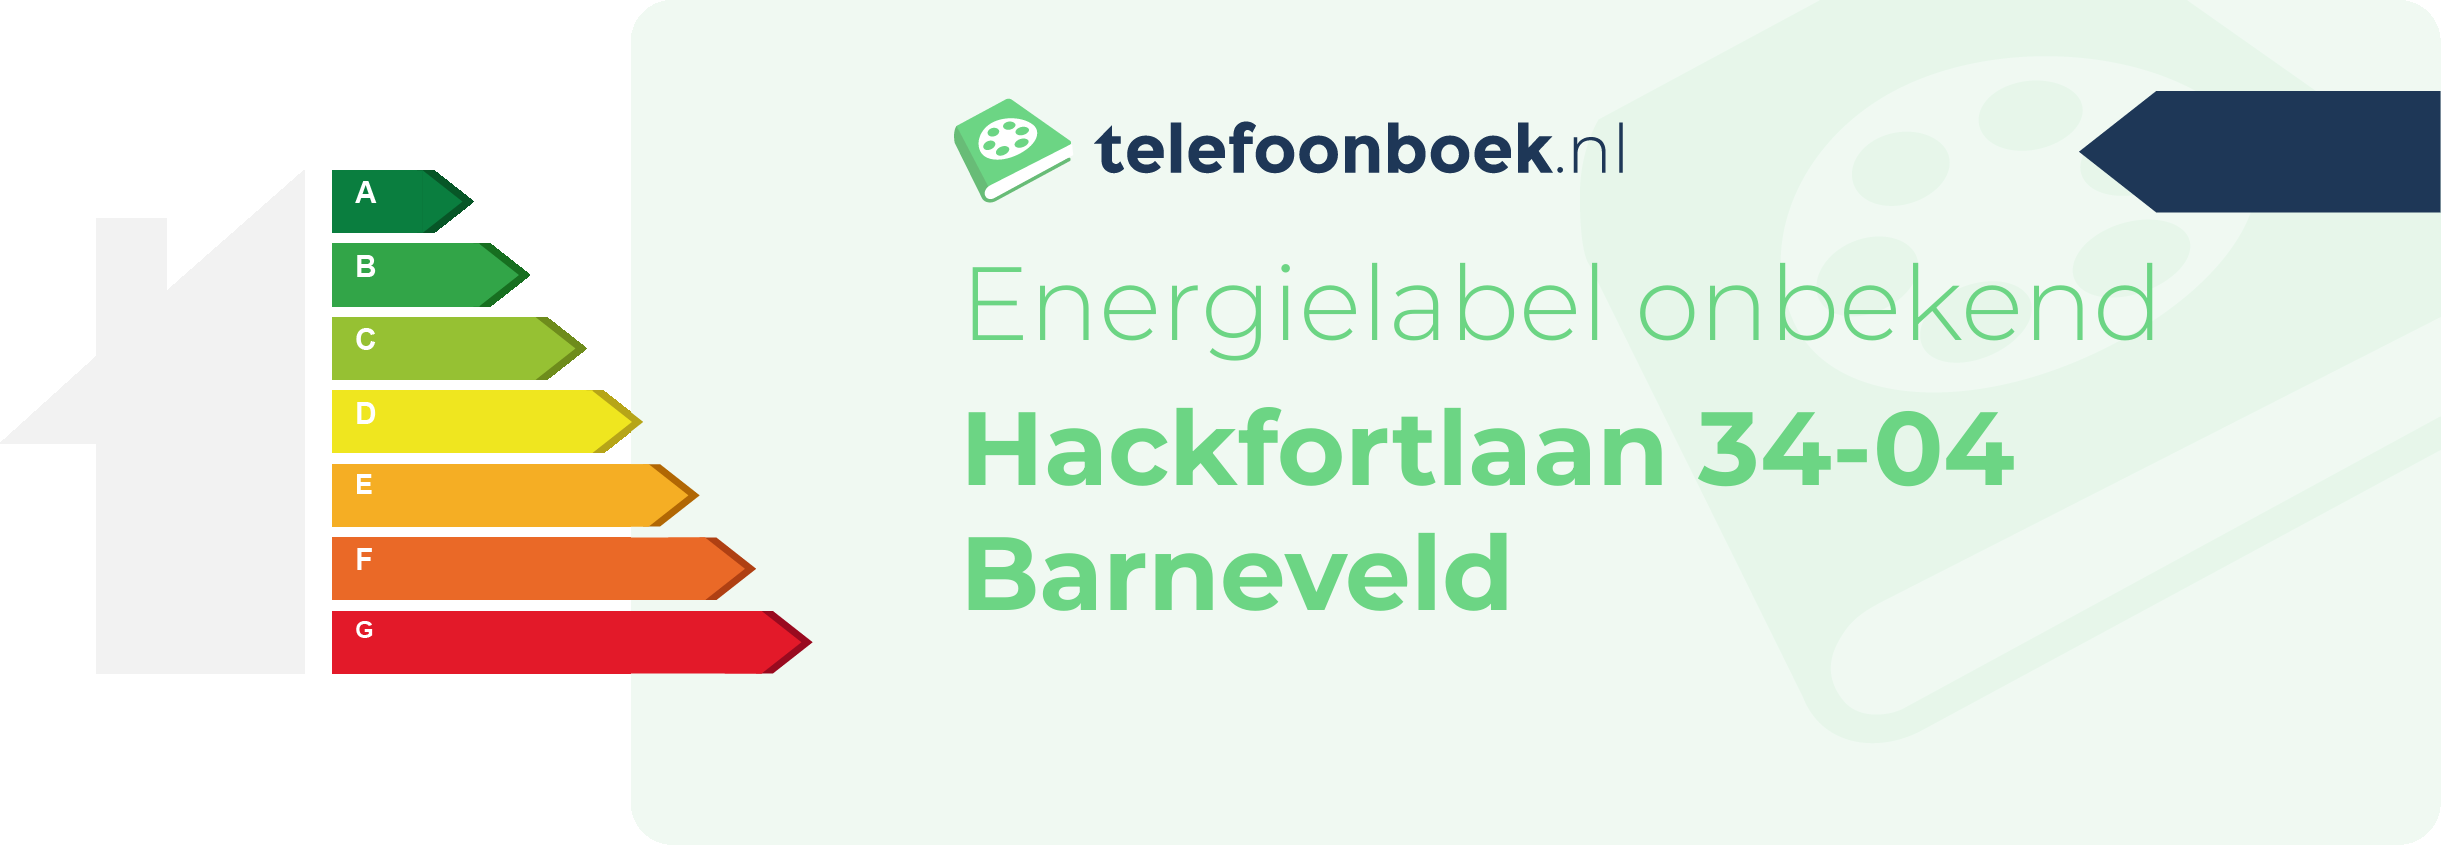 Energielabel Hackfortlaan 34-04 Barneveld